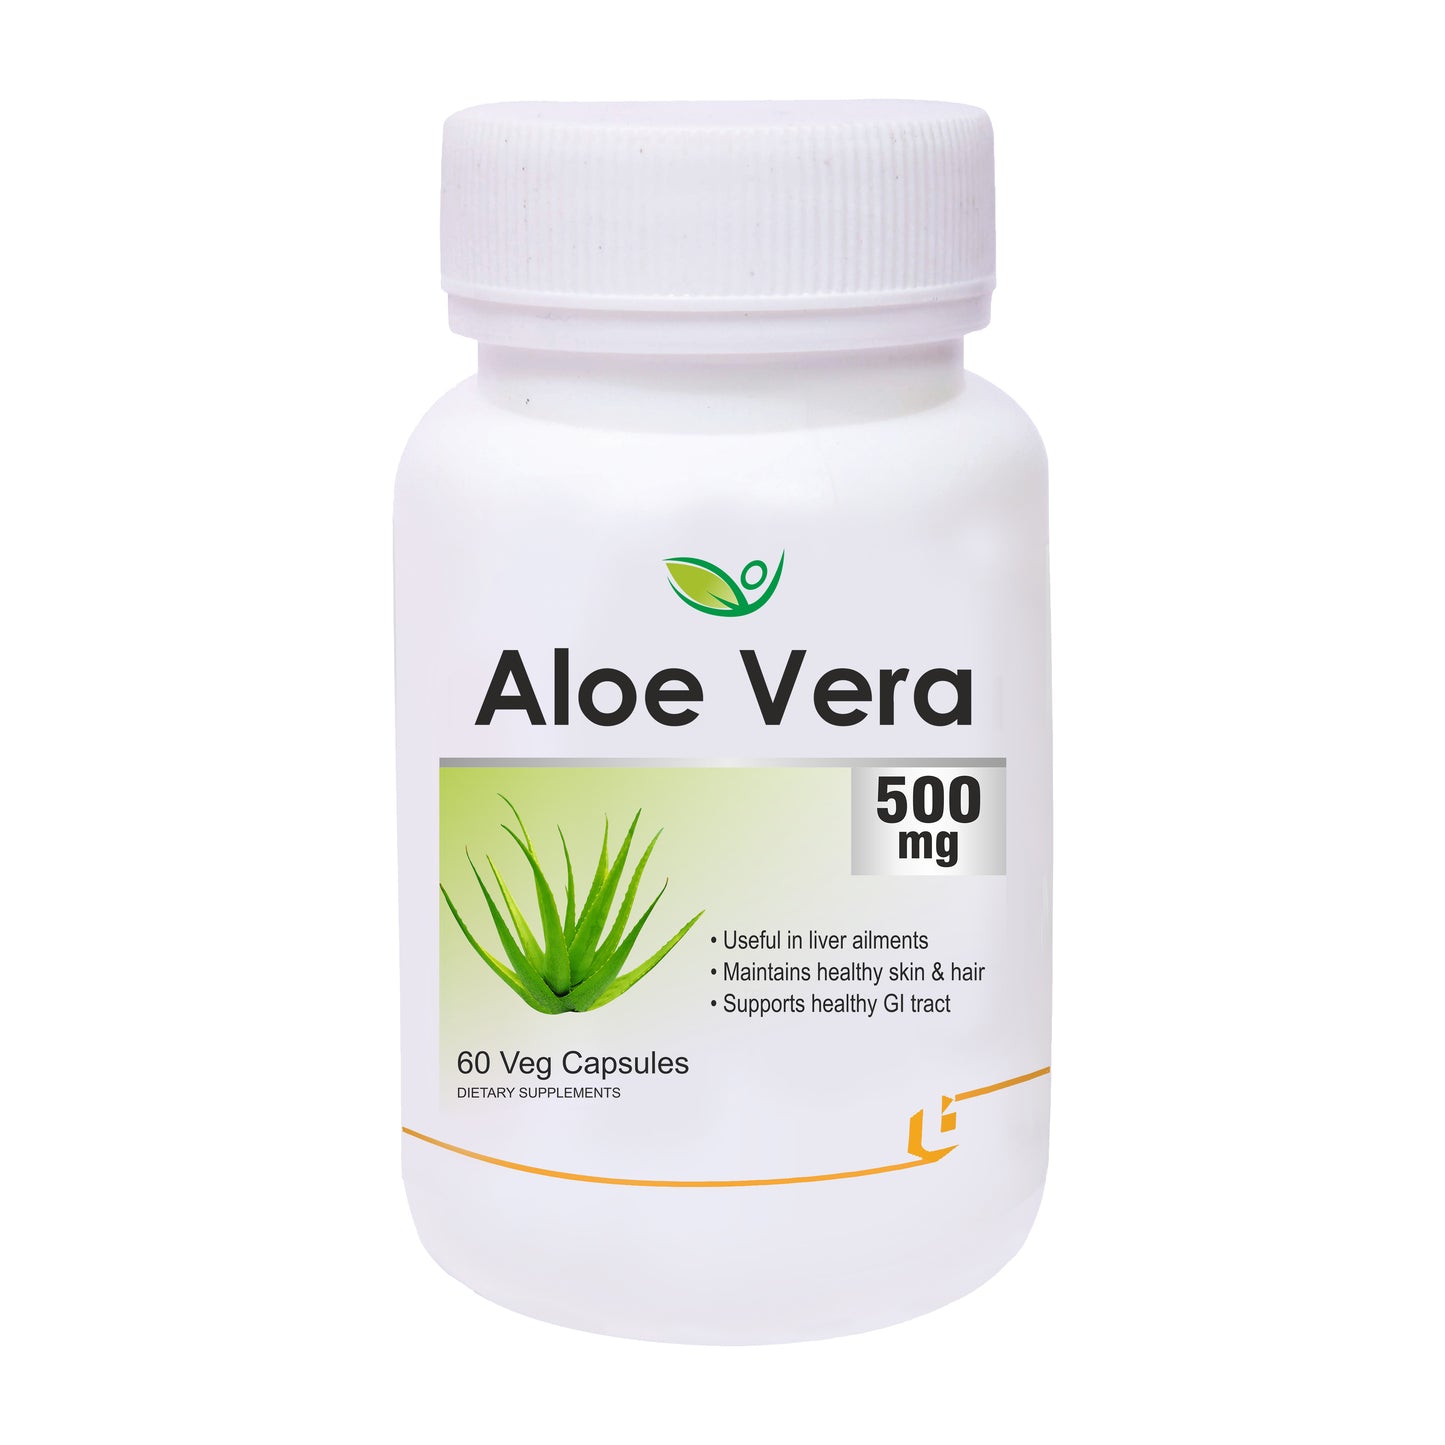 Biotrex Aloe Vera 500mg - 60 Capsules